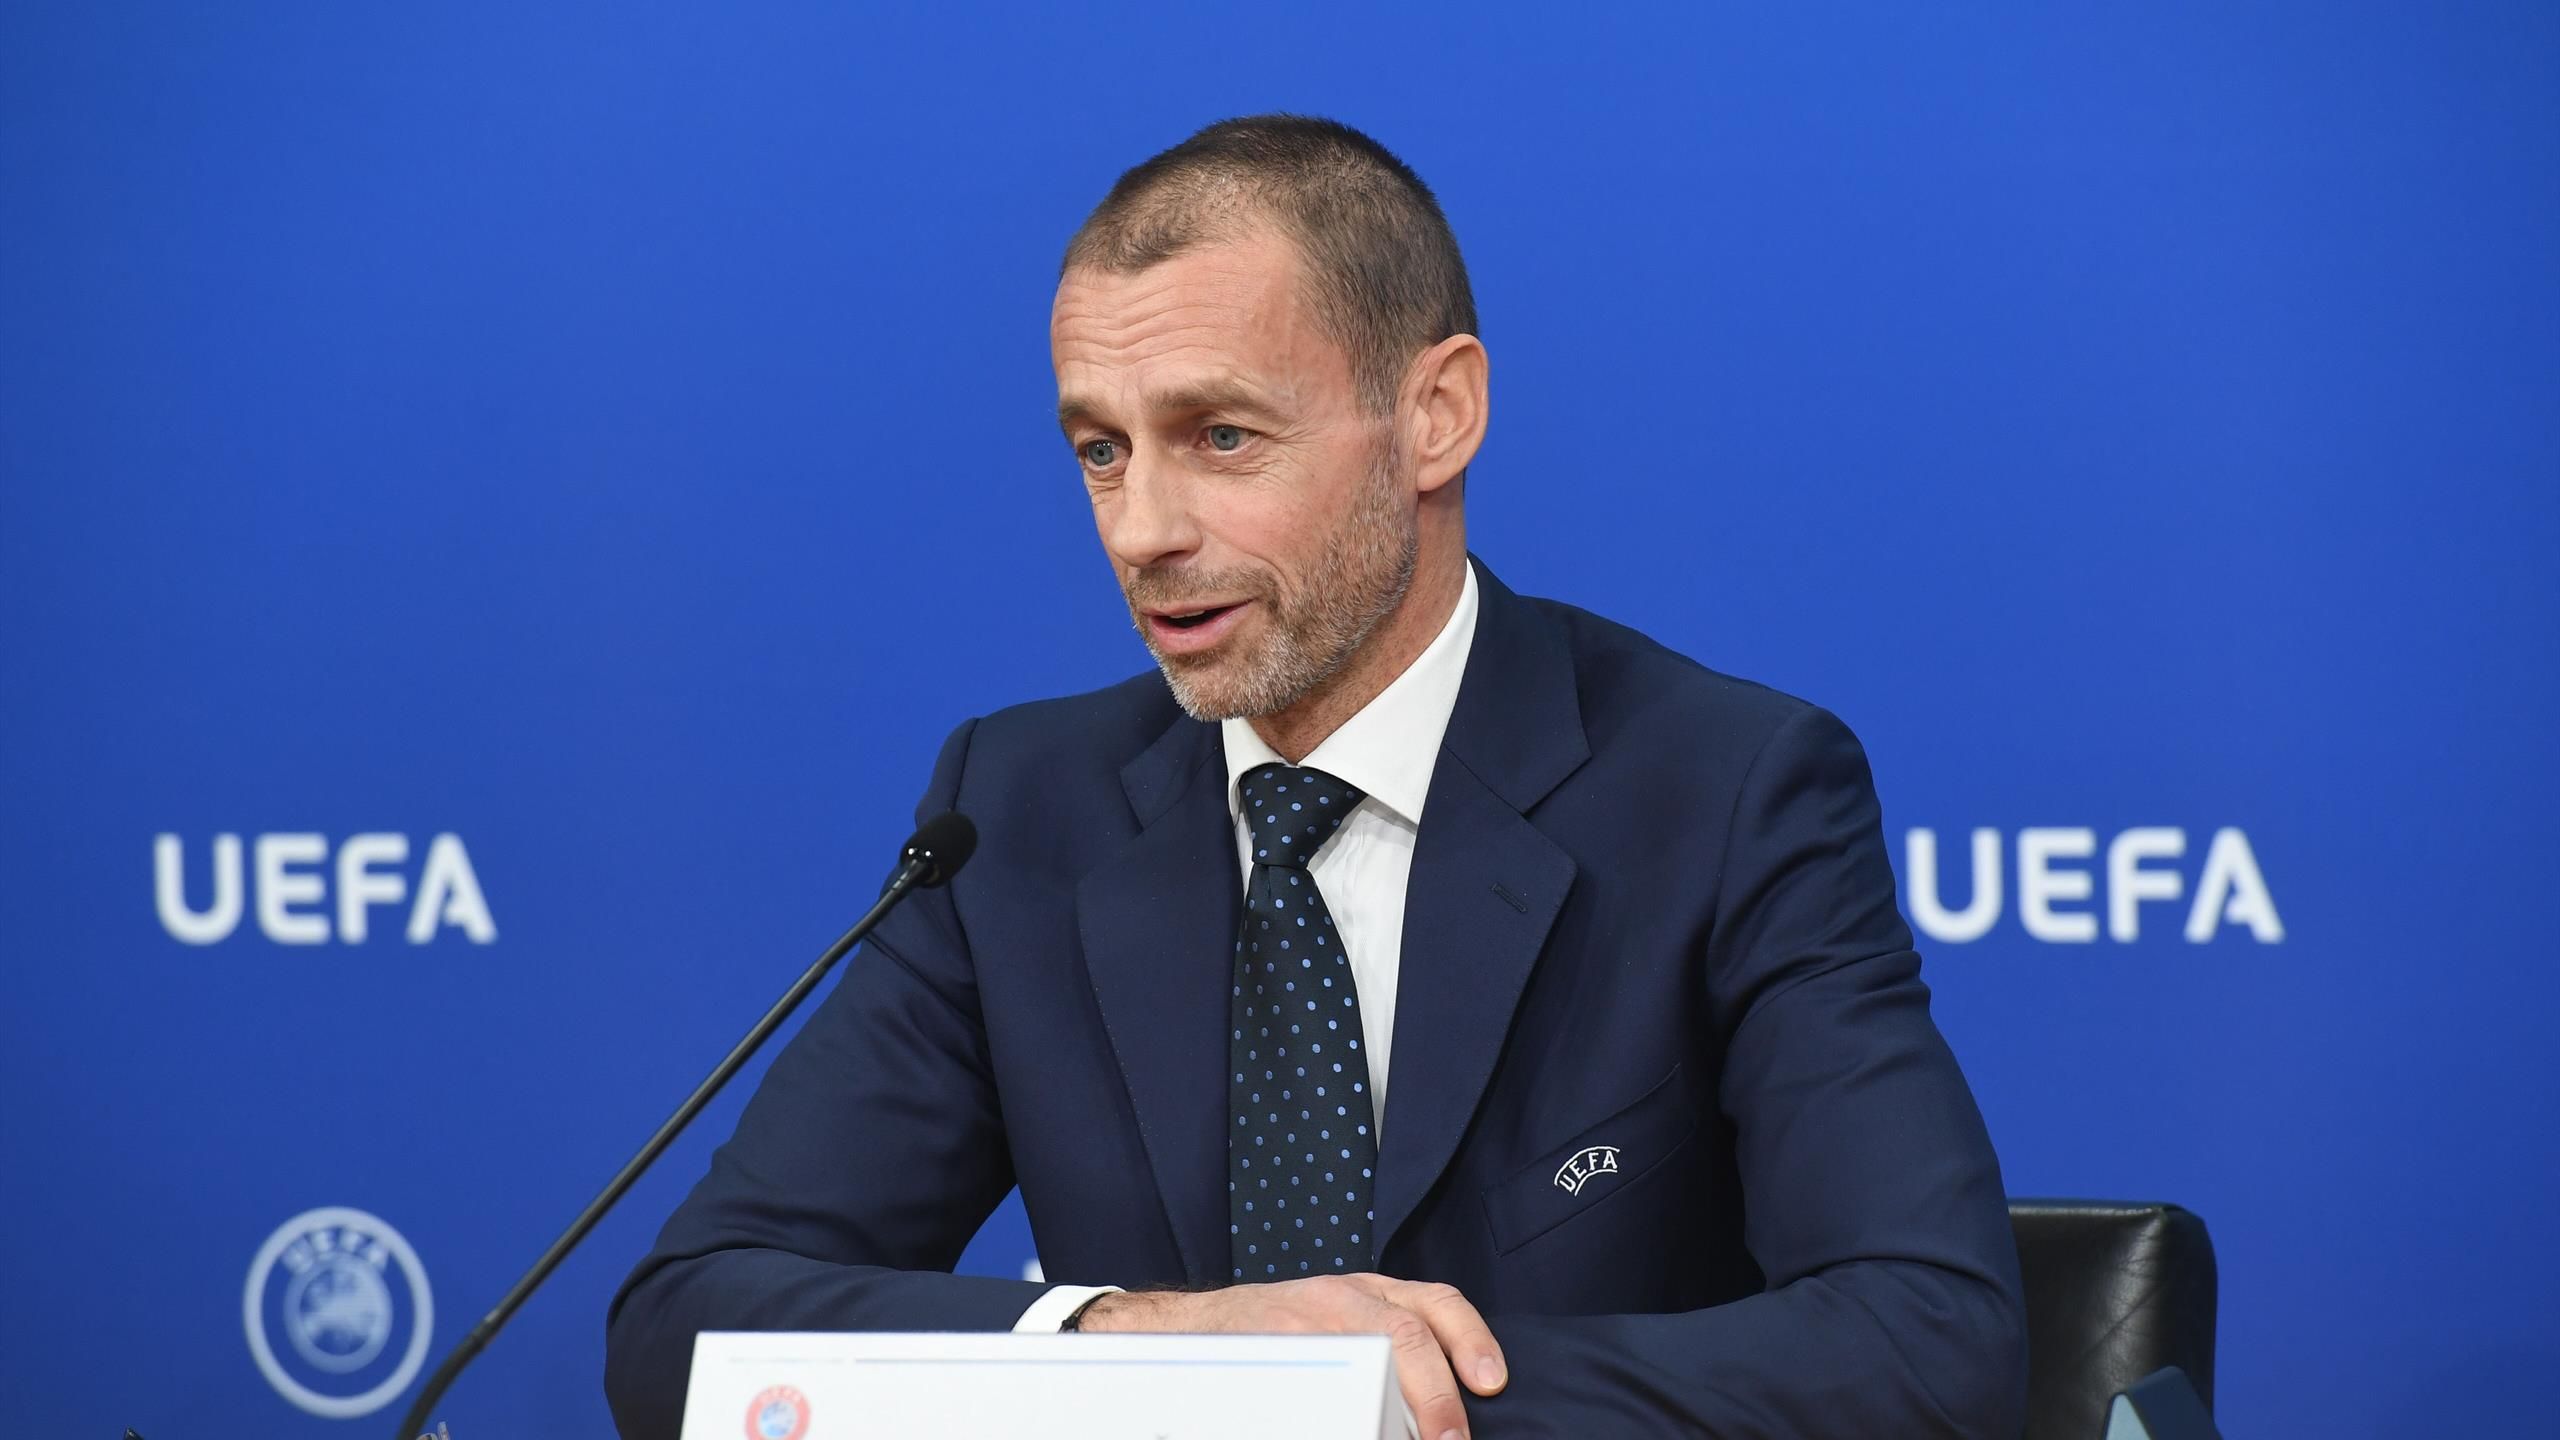 UEFA president Aleksander Ceferin says a 'final four' Champions